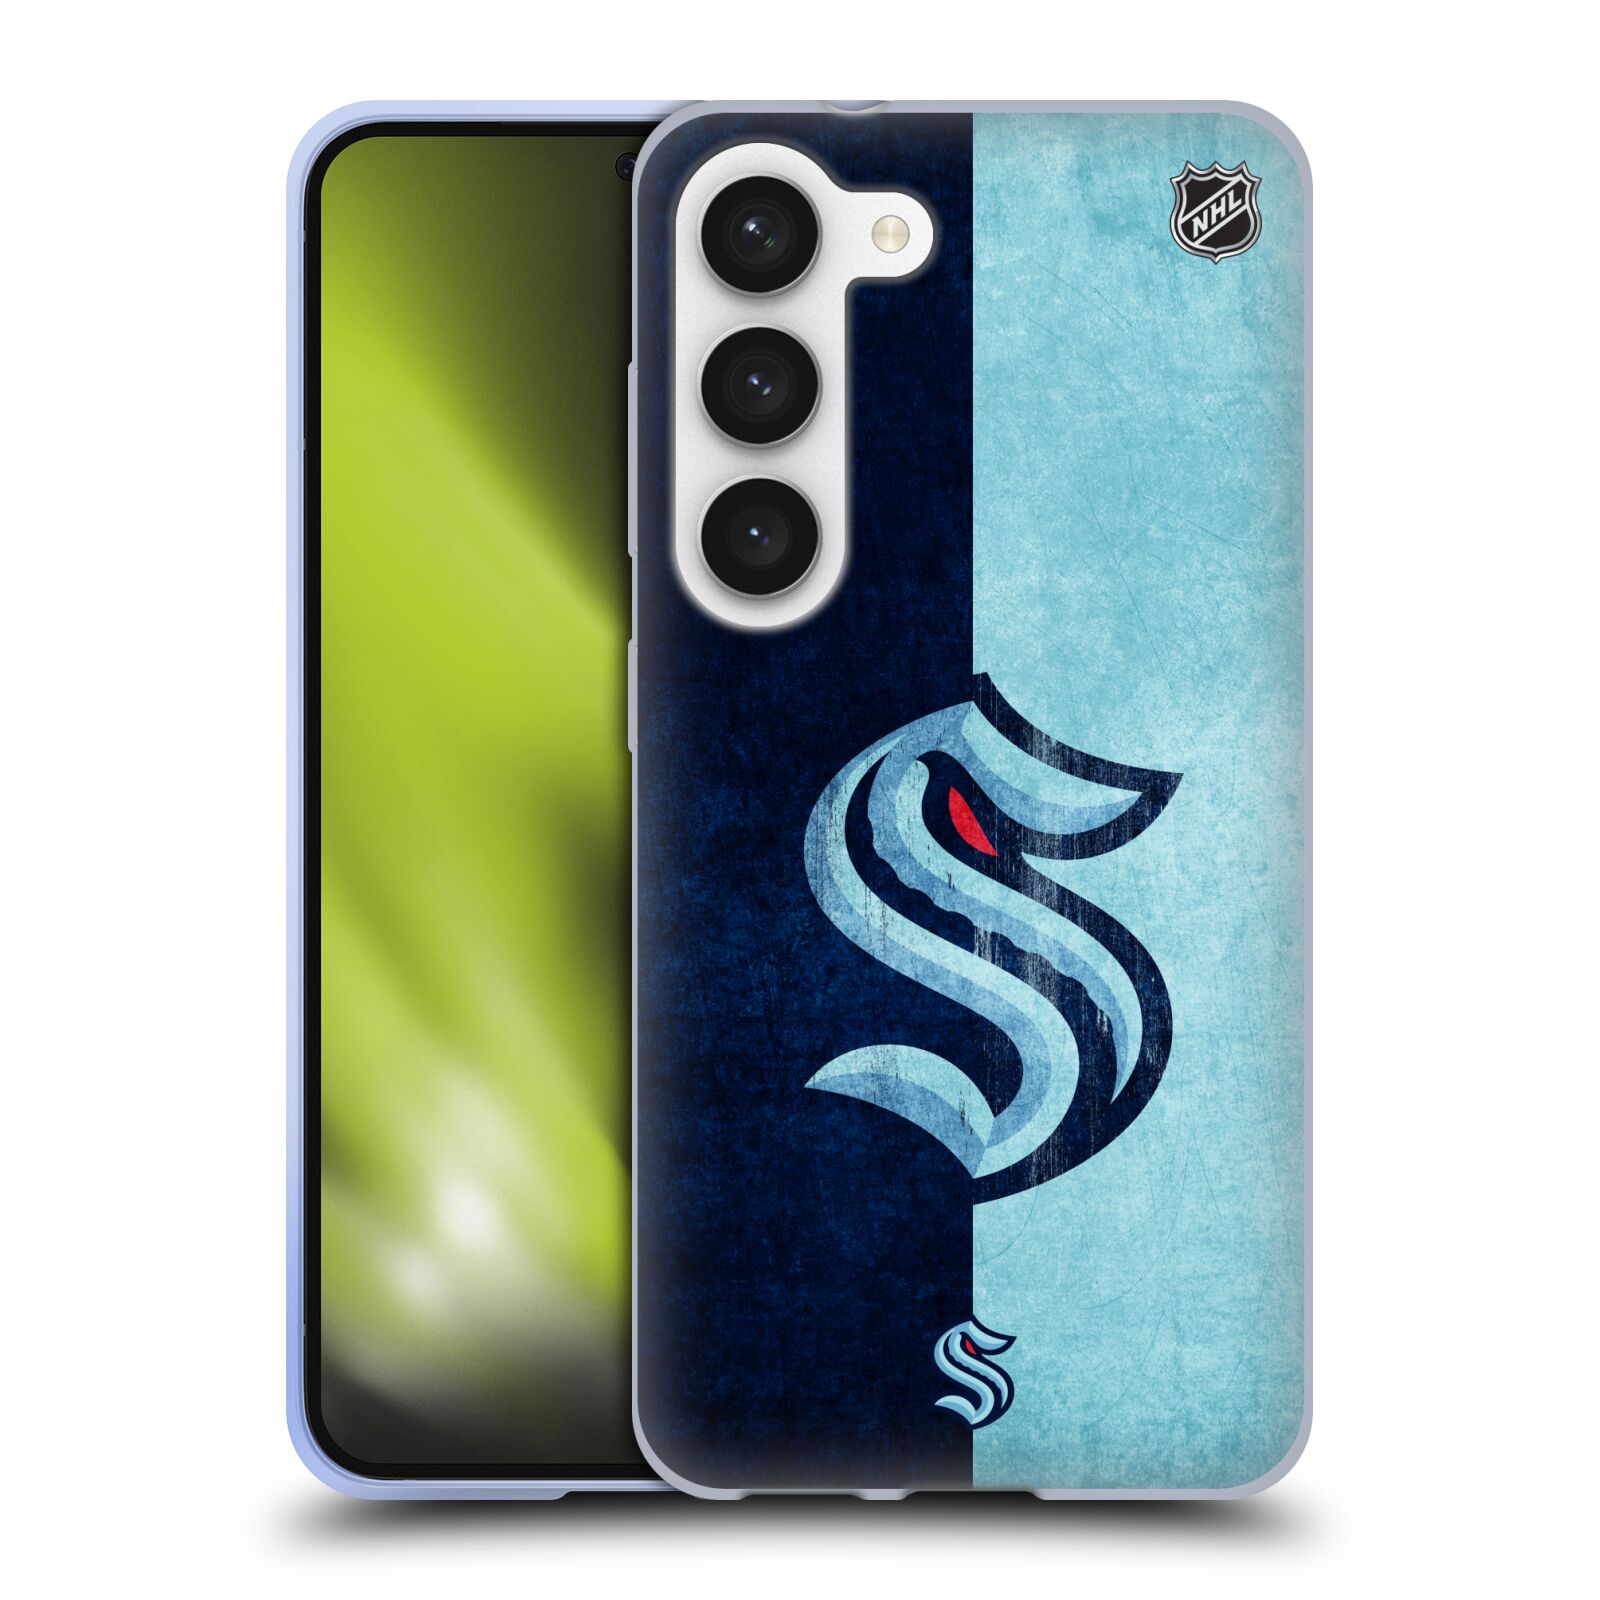 Silikonové pouzdro na mobil Samsung Galaxy S23 - NHL - Půlené logo Seattle Kraken (Silikonový kryt, obal, pouzdro na mobilní telefon Samsung Galaxy S23 s licencovaným motivem NHL - Půlené logo Seattle Kraken)